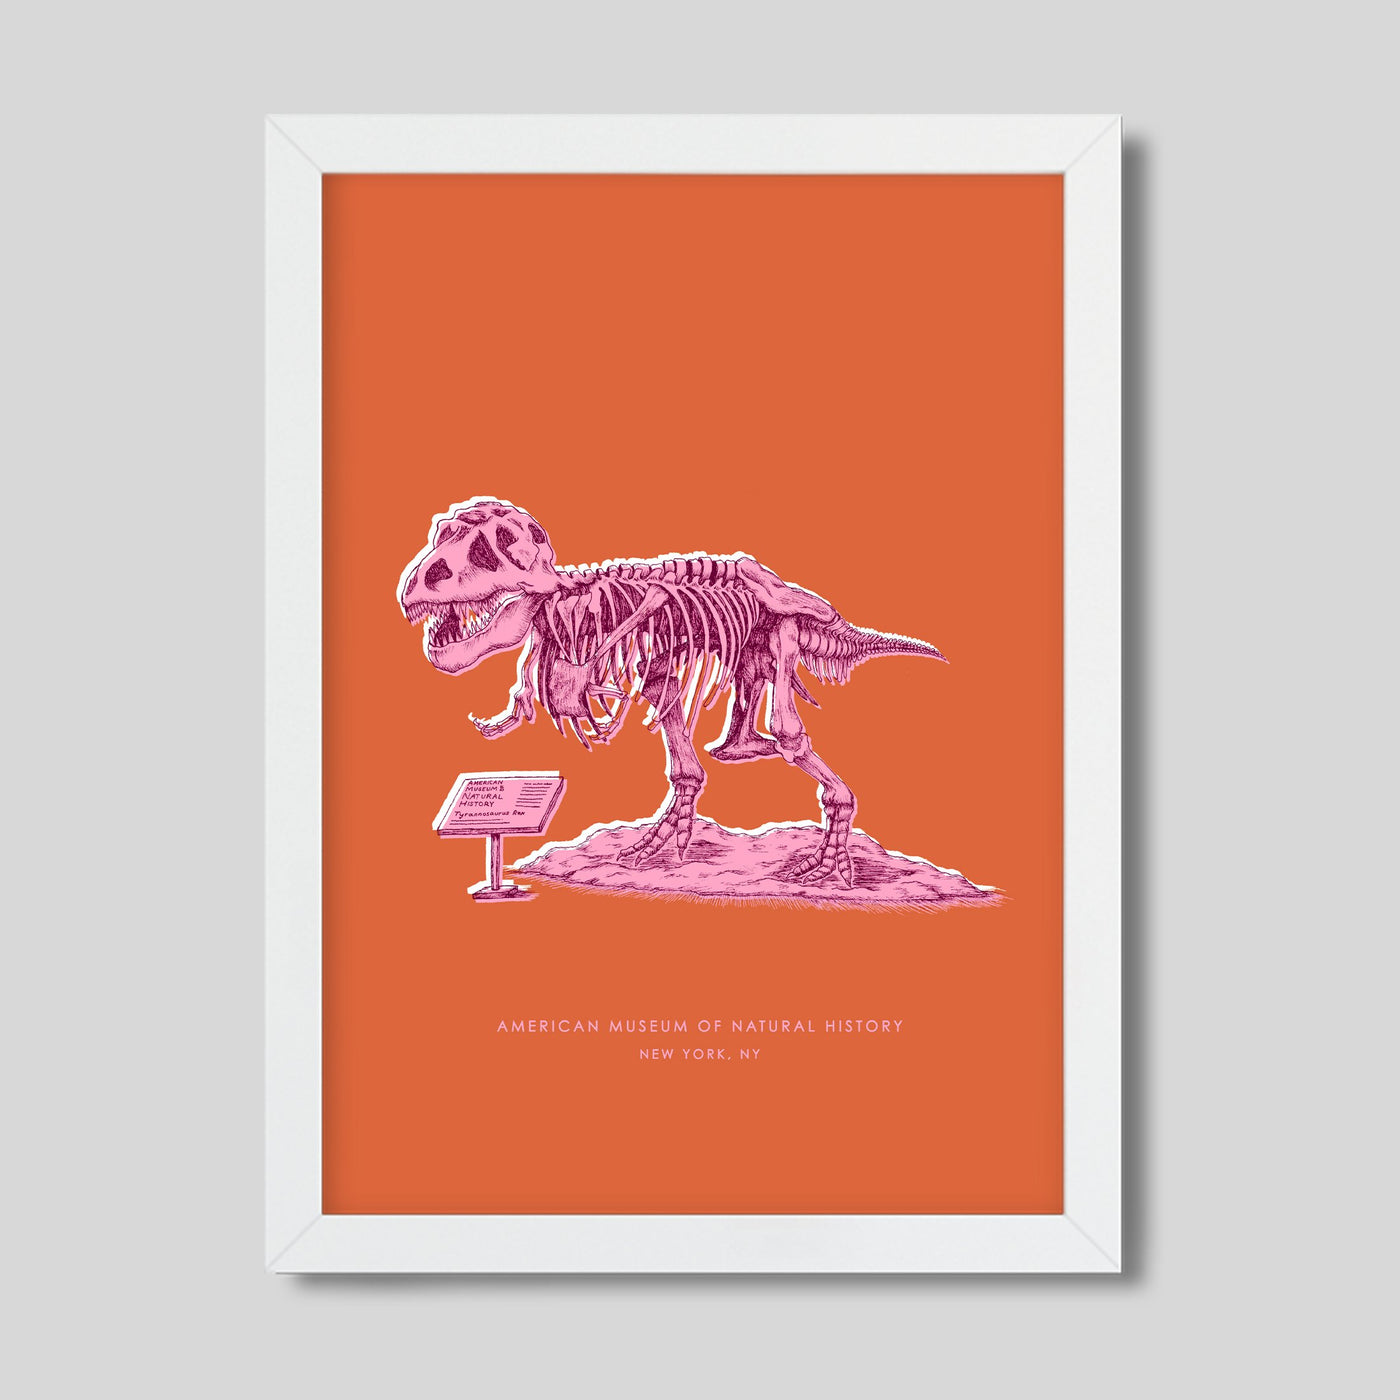 Gallery Prints Orange Print / 8x10 / White Frame New York Dinosaur Print dombezalergii